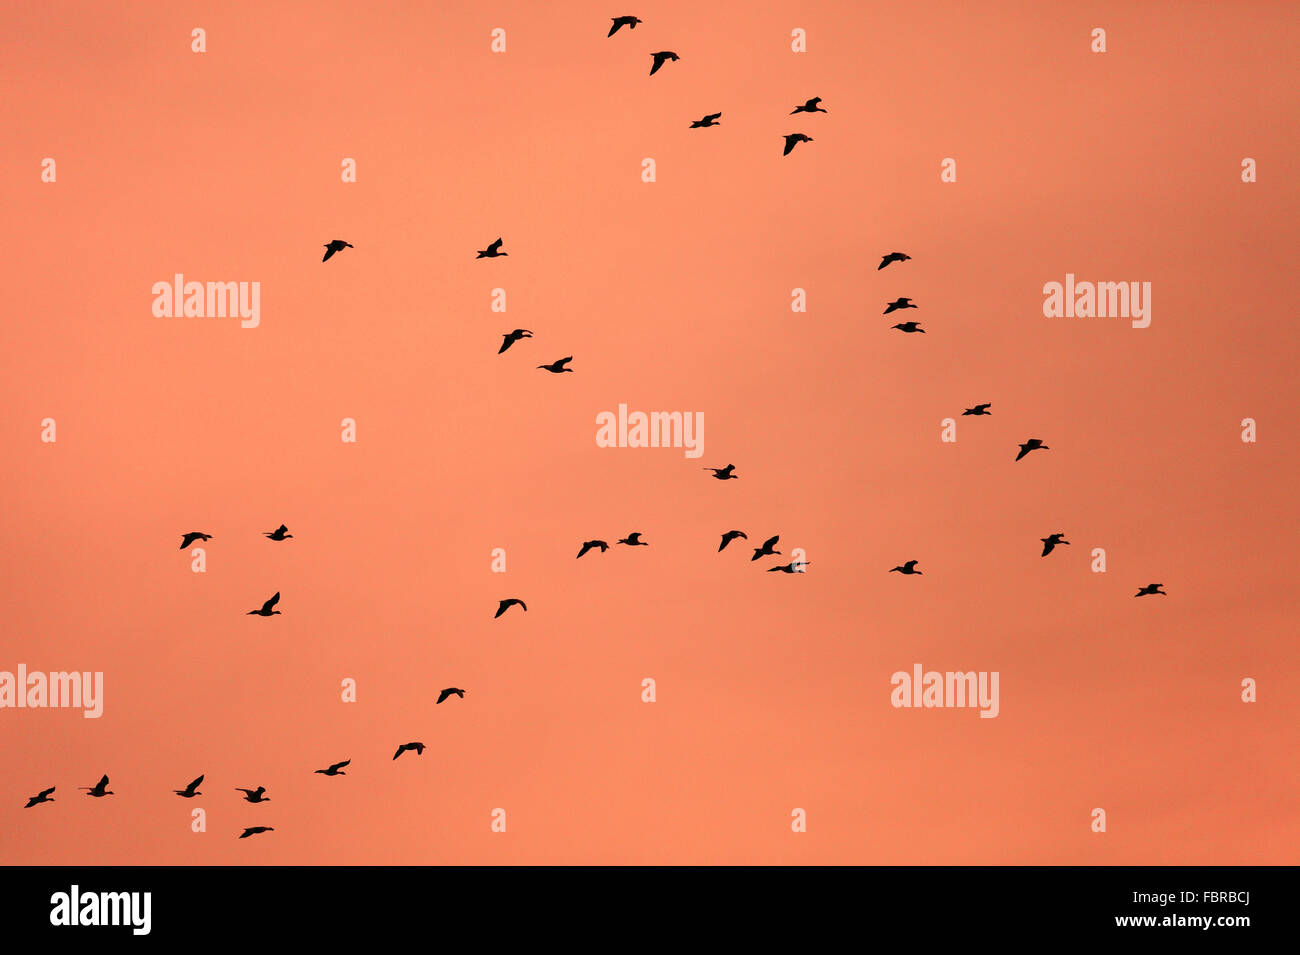 Flock of geese flying against an orange sky. Stock Photo